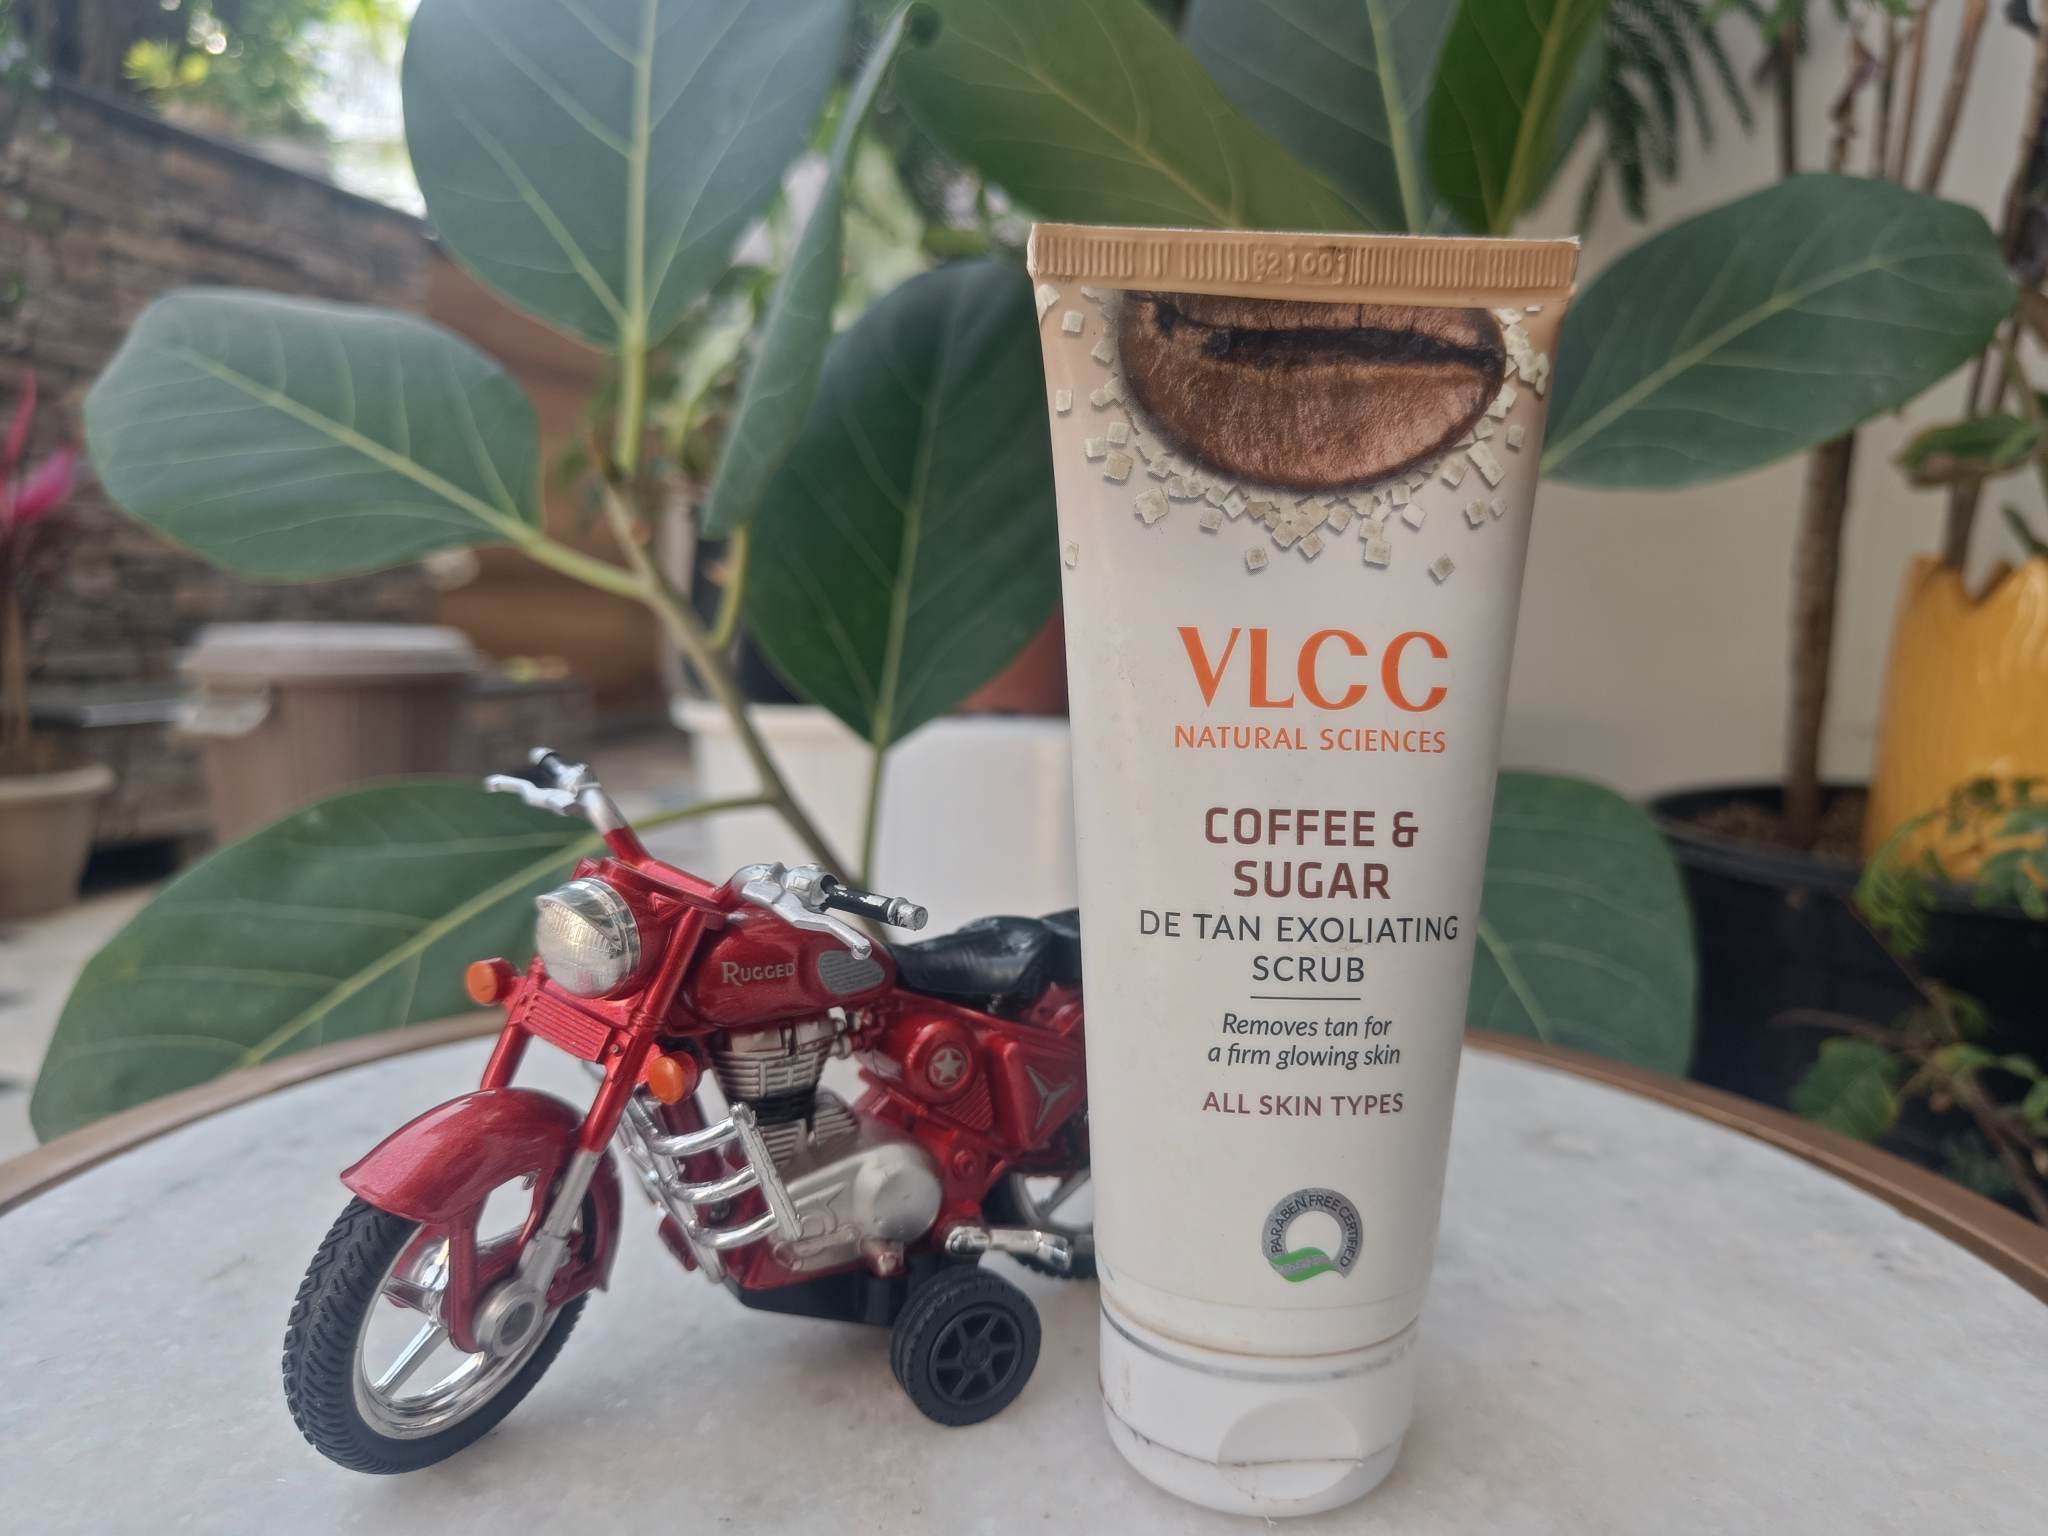 VLCC Coffee & Sugar De Tan Exfoliating Scrub| Review